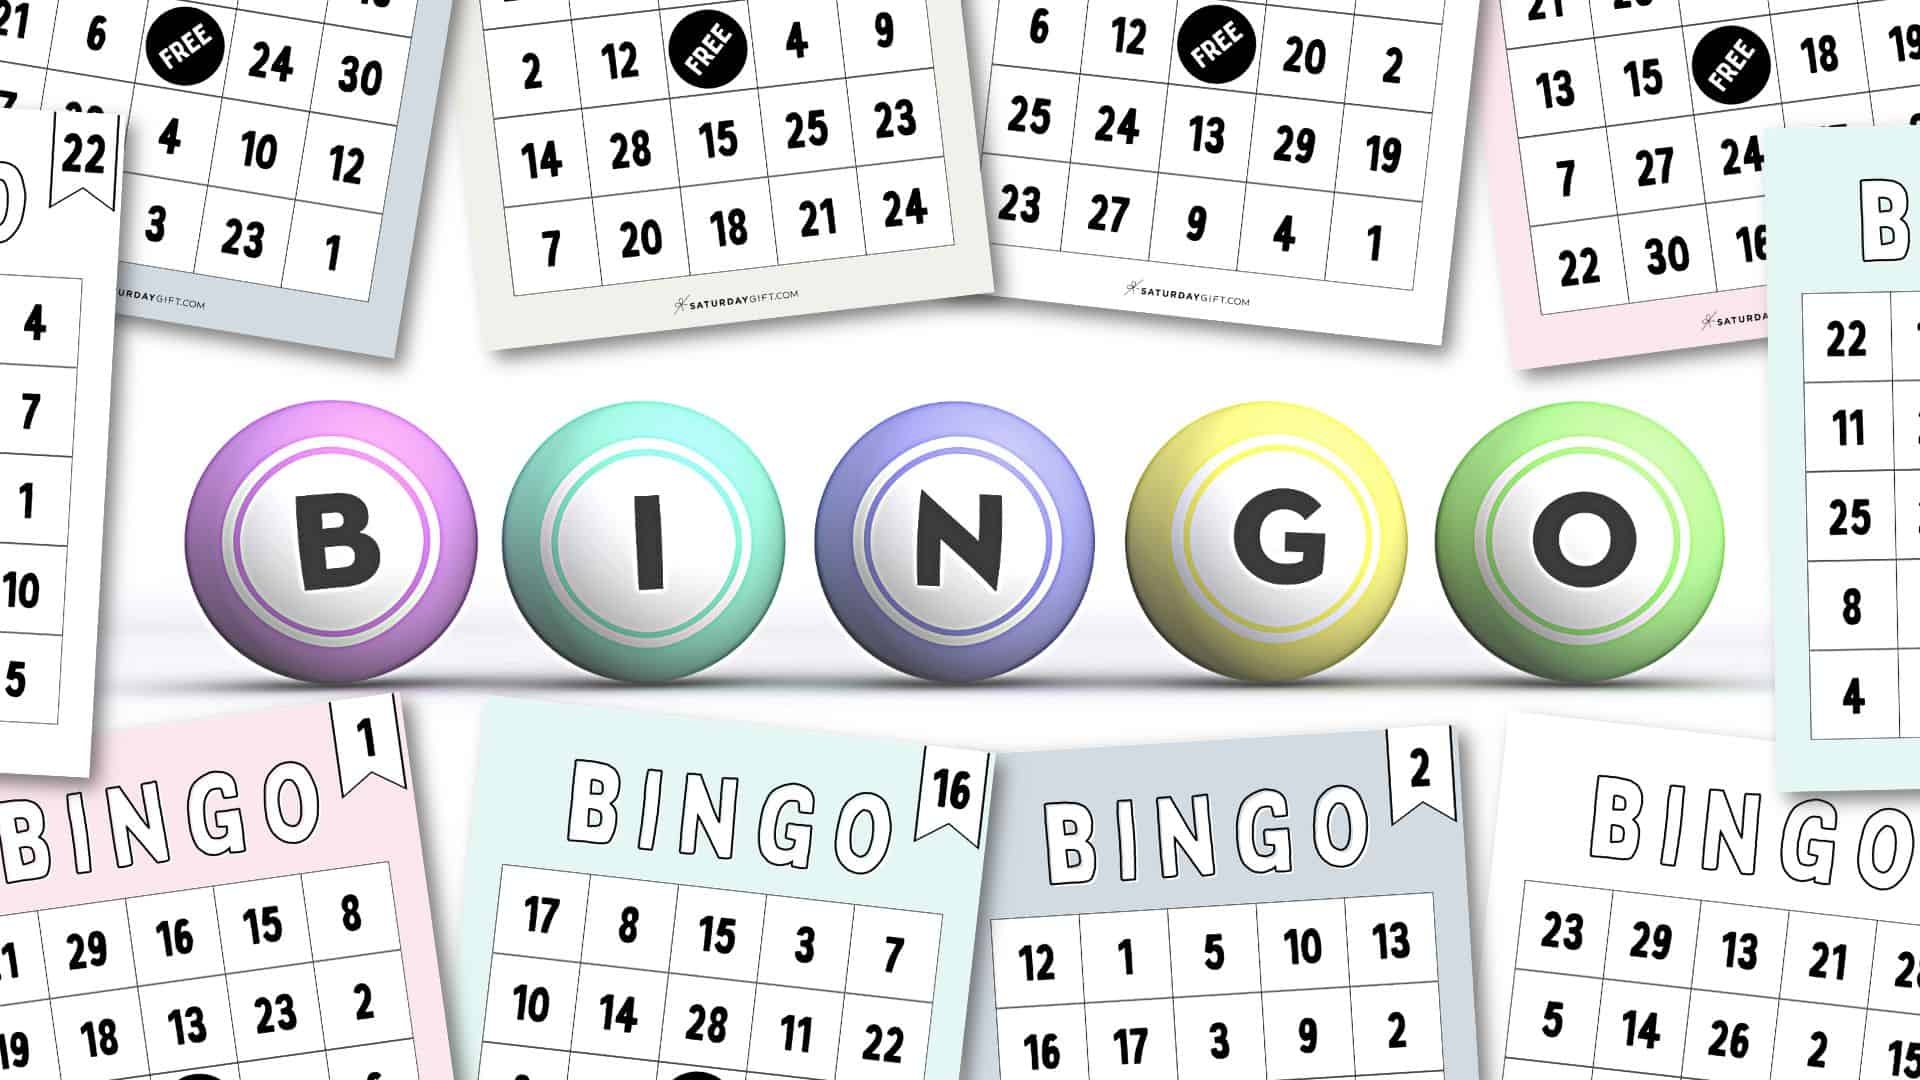 Cute Free Printable Bingo Cards 30 Cards Calling Sheet SaturdayGift - Free Printable Bingo Cards and Call Sheet